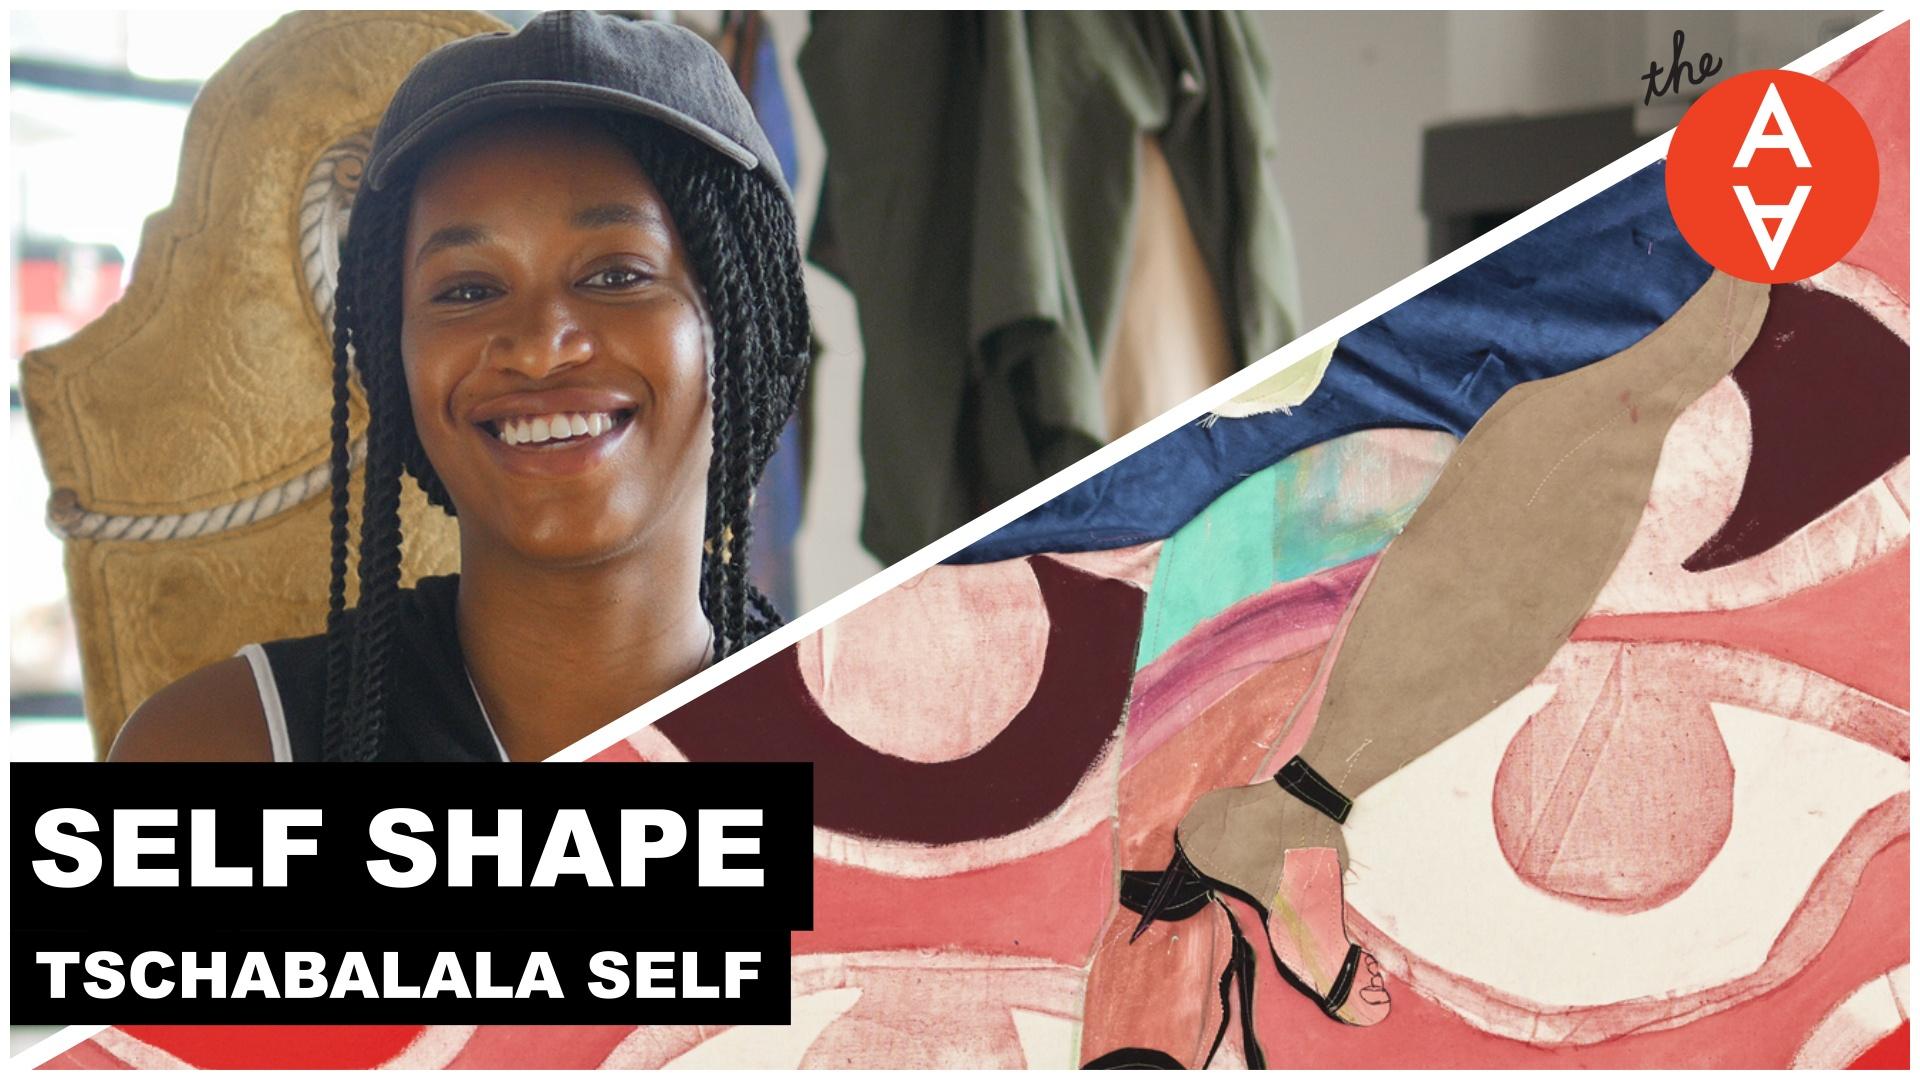 The Art Assignment, Self Shape - Tschabalala Self